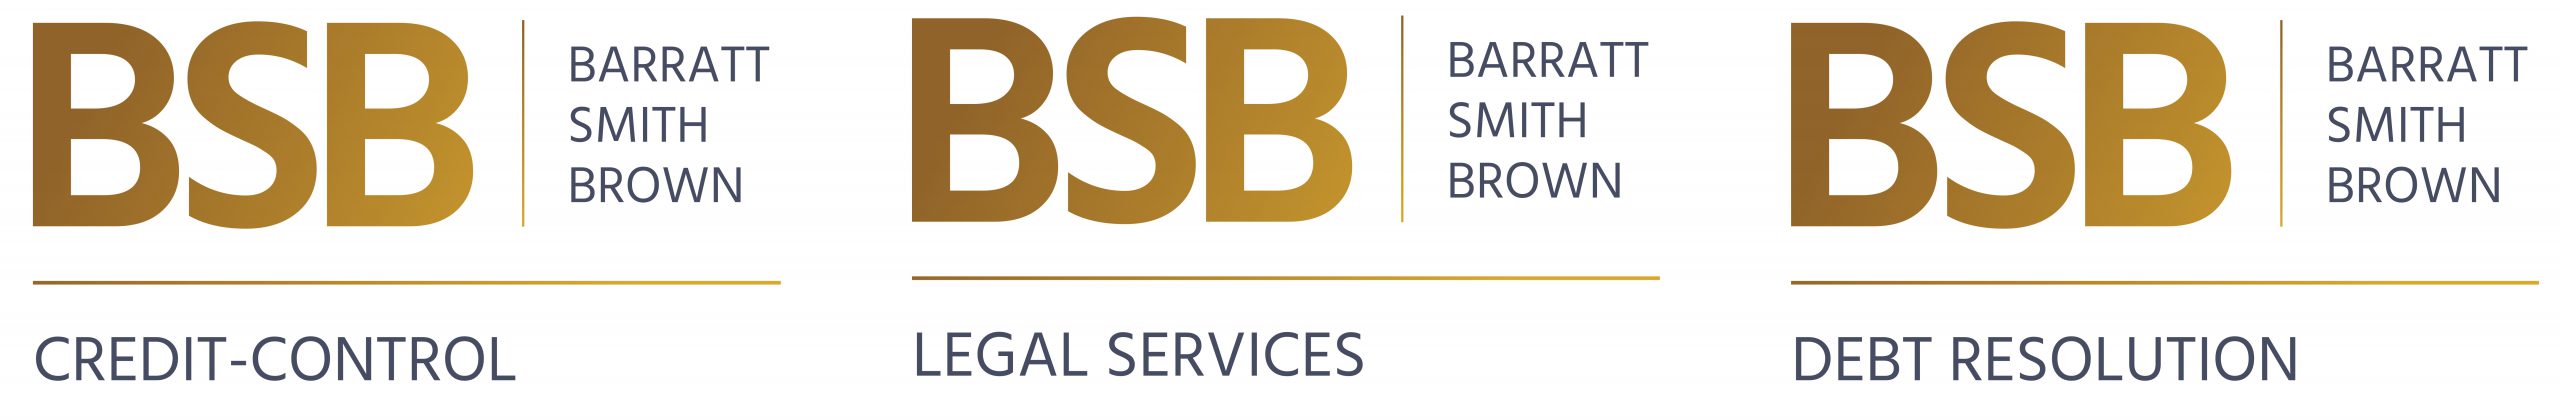 BSB sub-brands